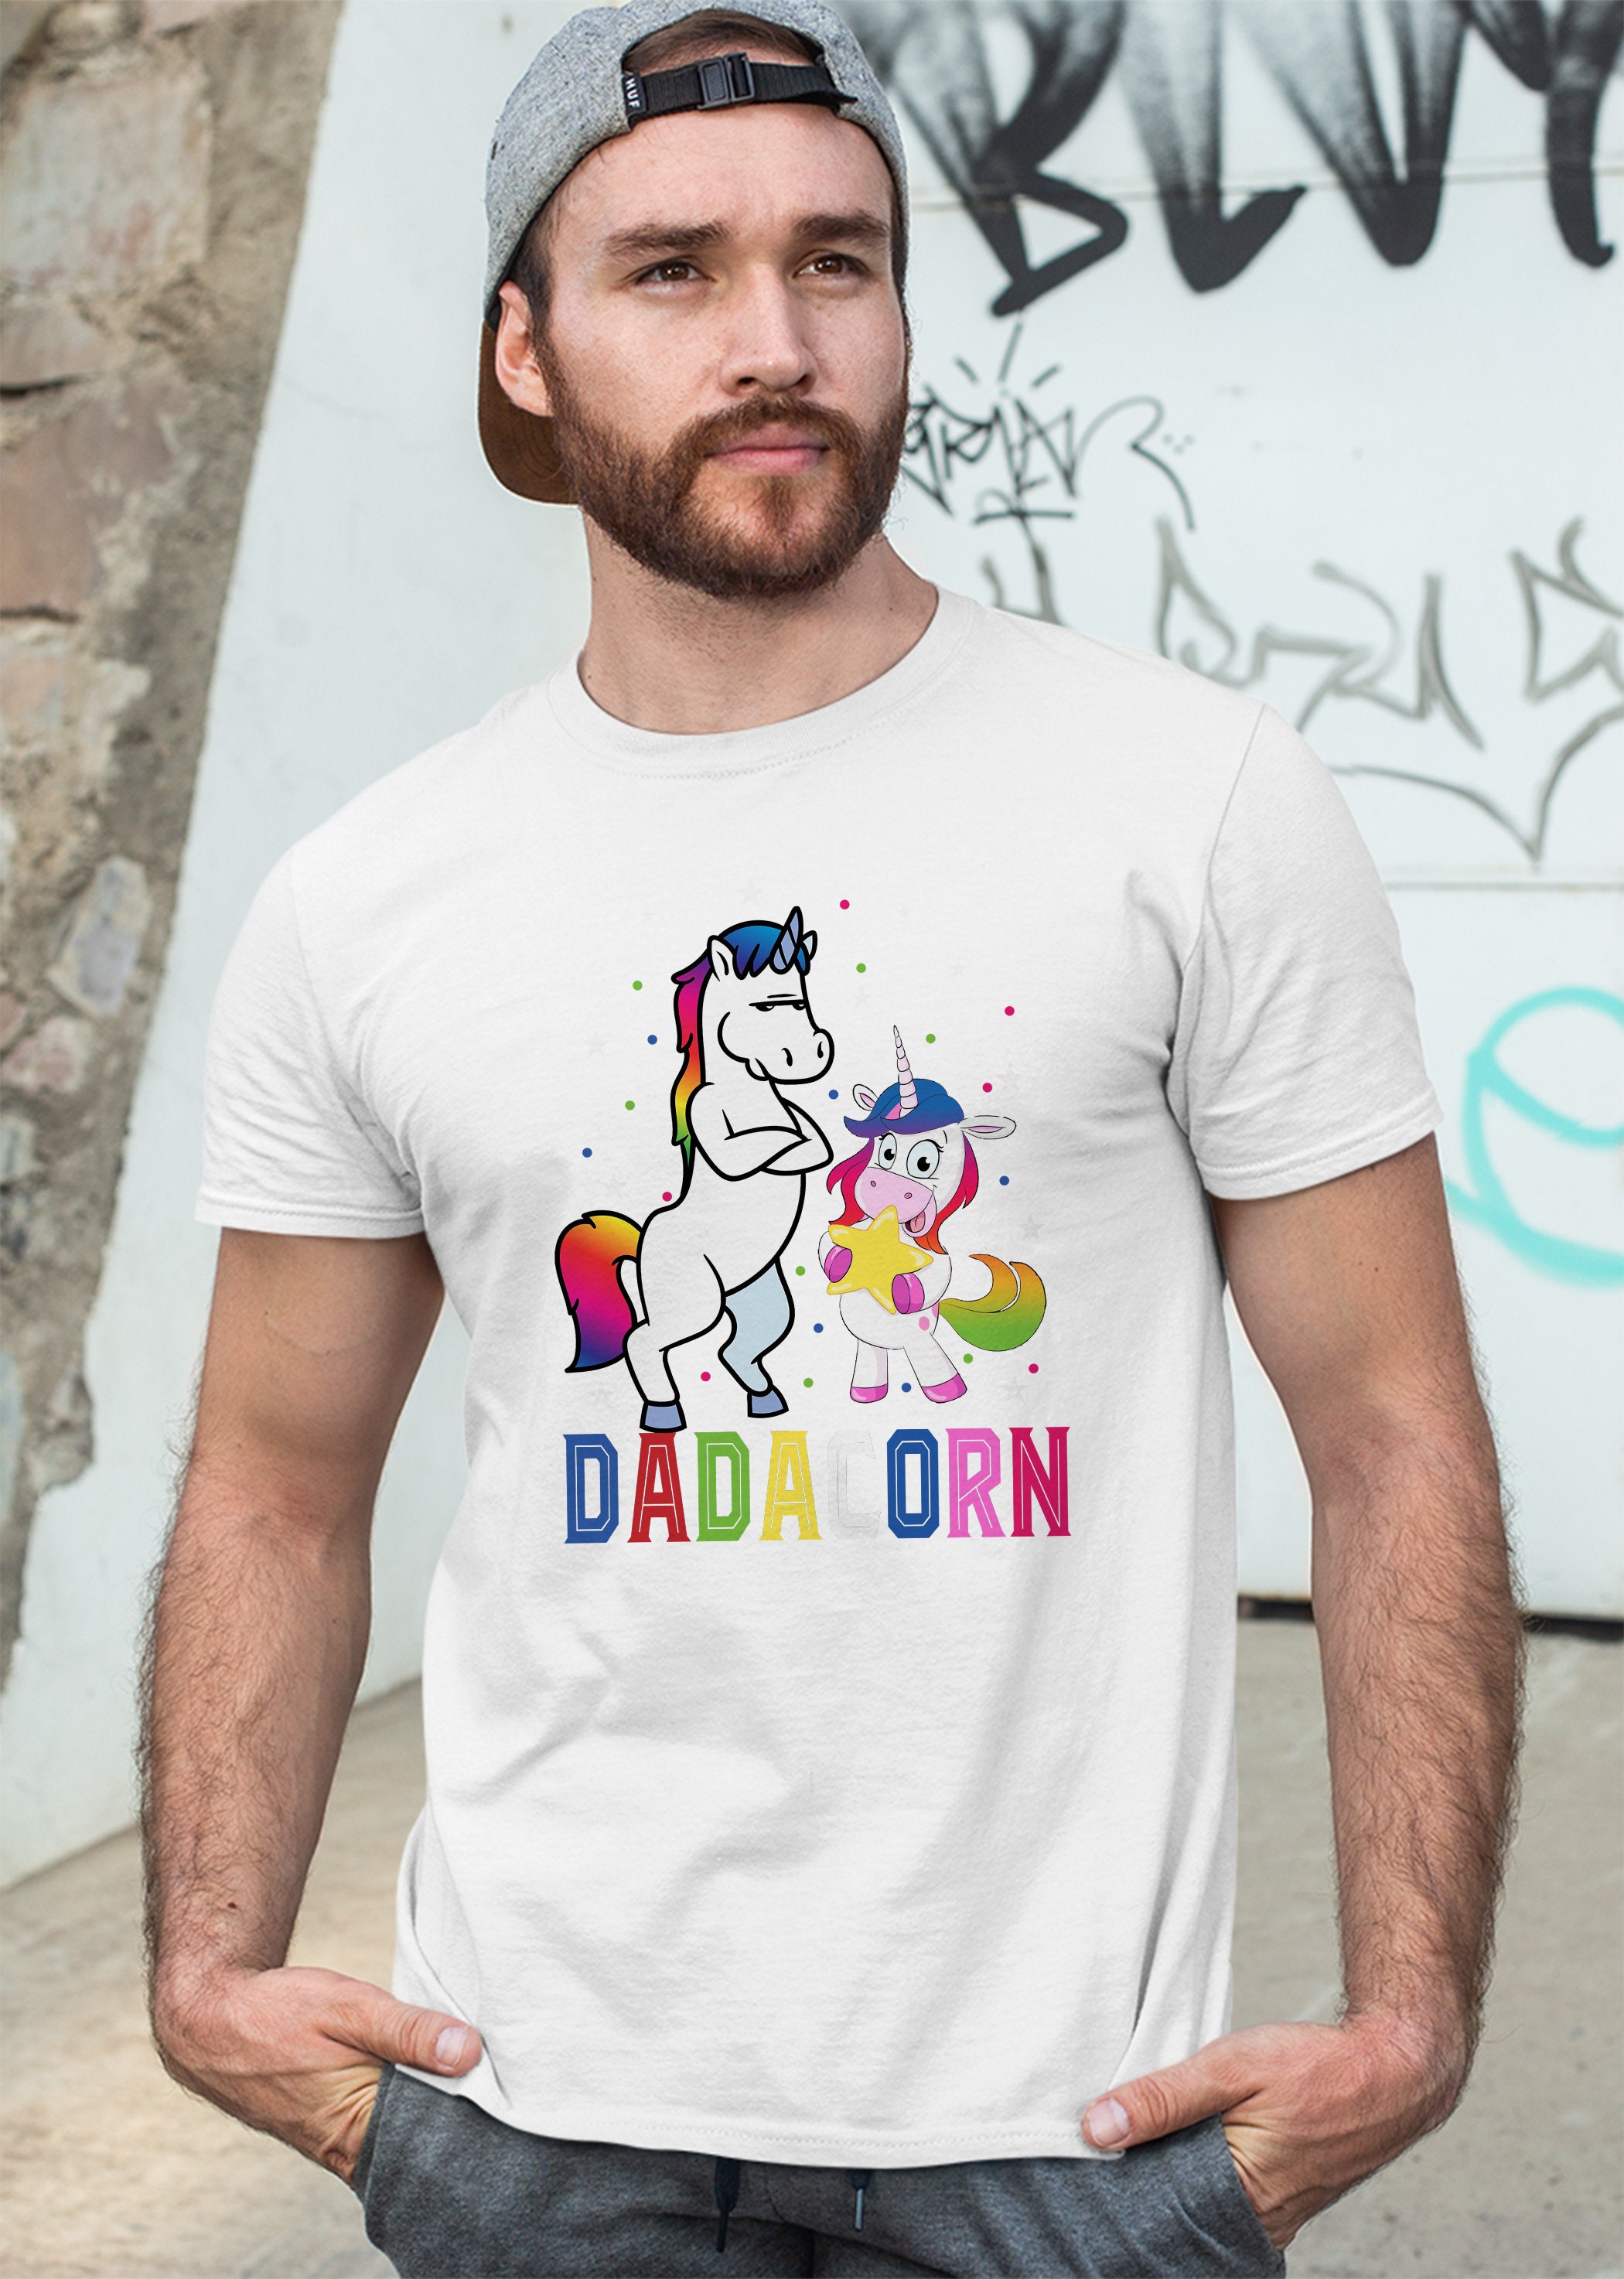 Dadacorn Cool Unicorn Father’s Day Unisex T-Shirt